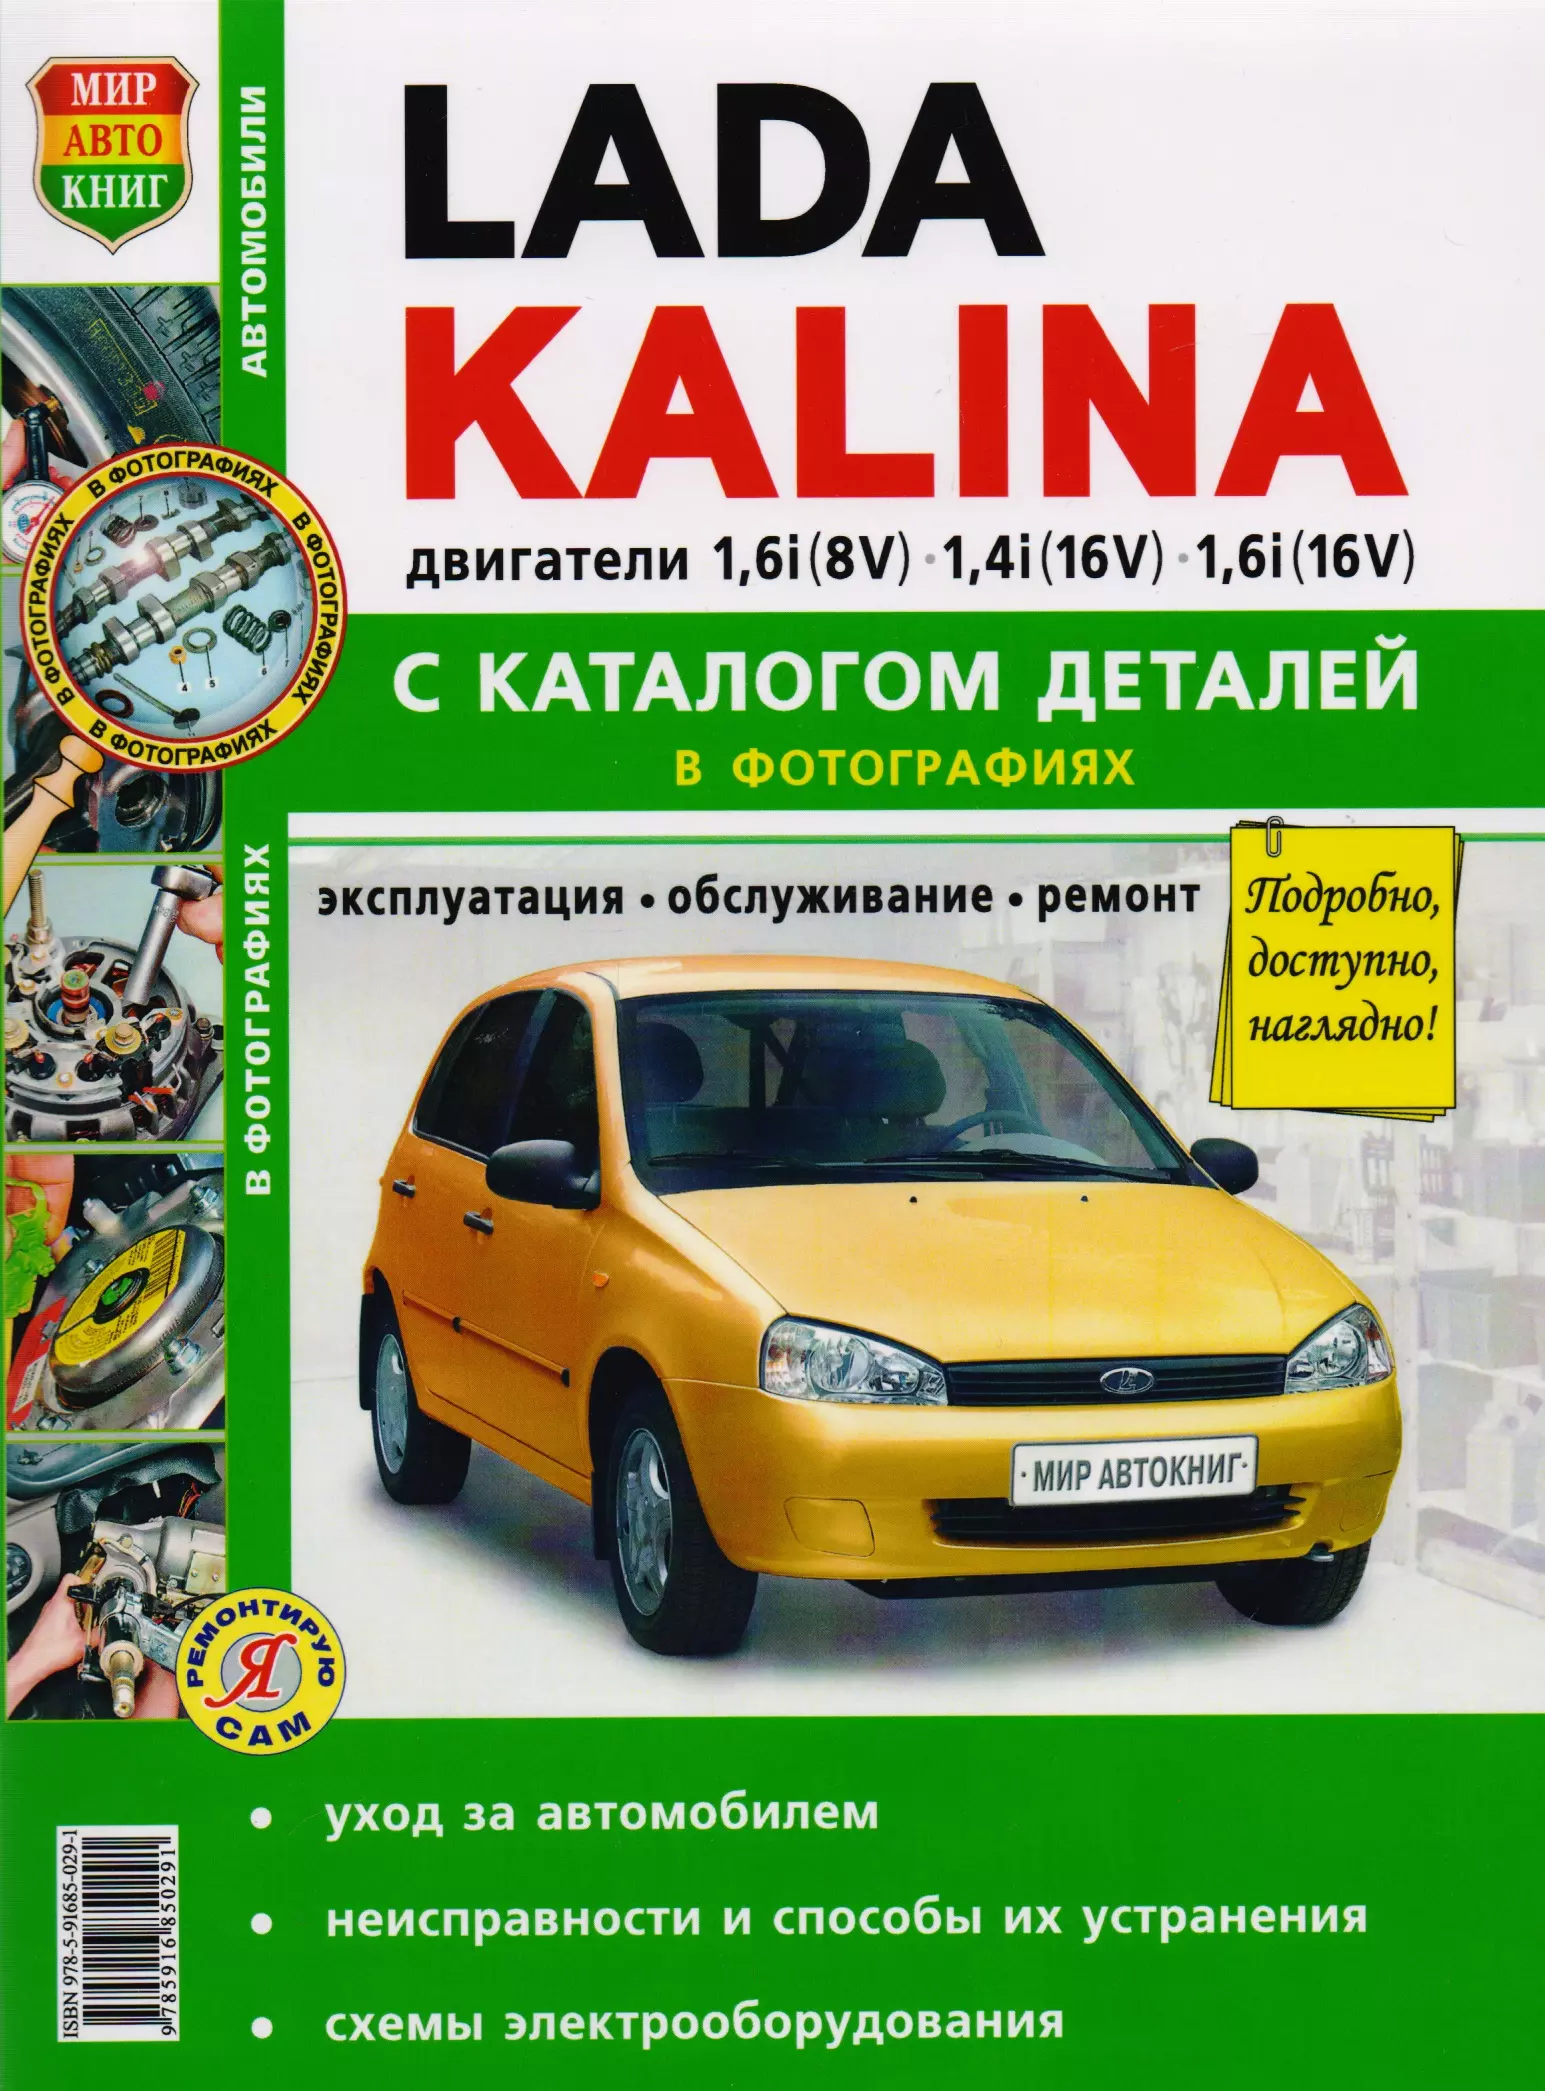  - ВАЗ Lada Kalina с каталогом цв. фото